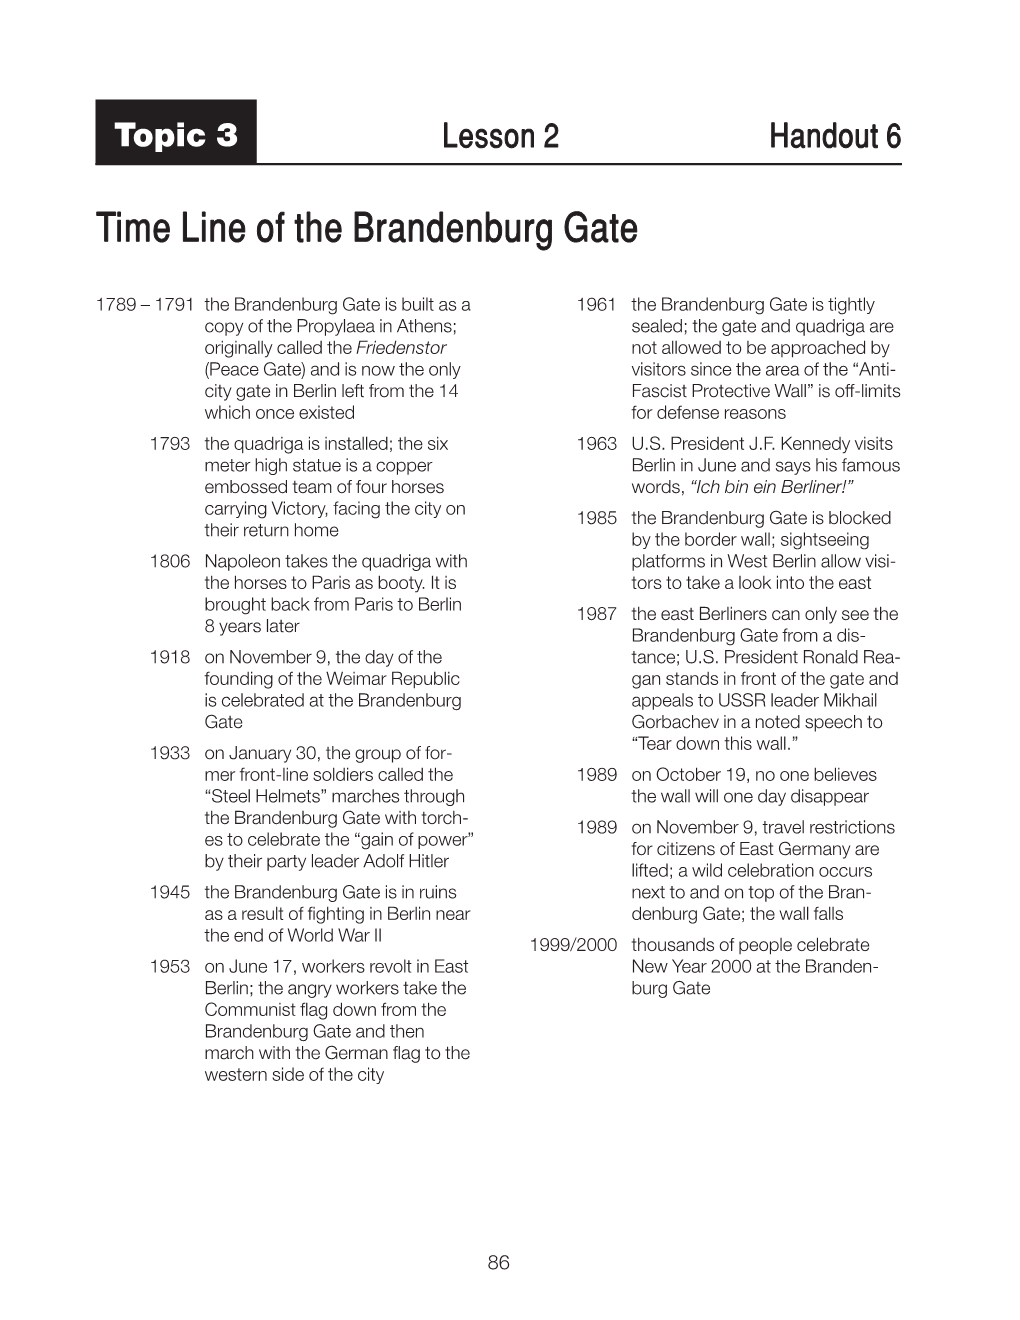 Time Line of the Brandenburg Gate